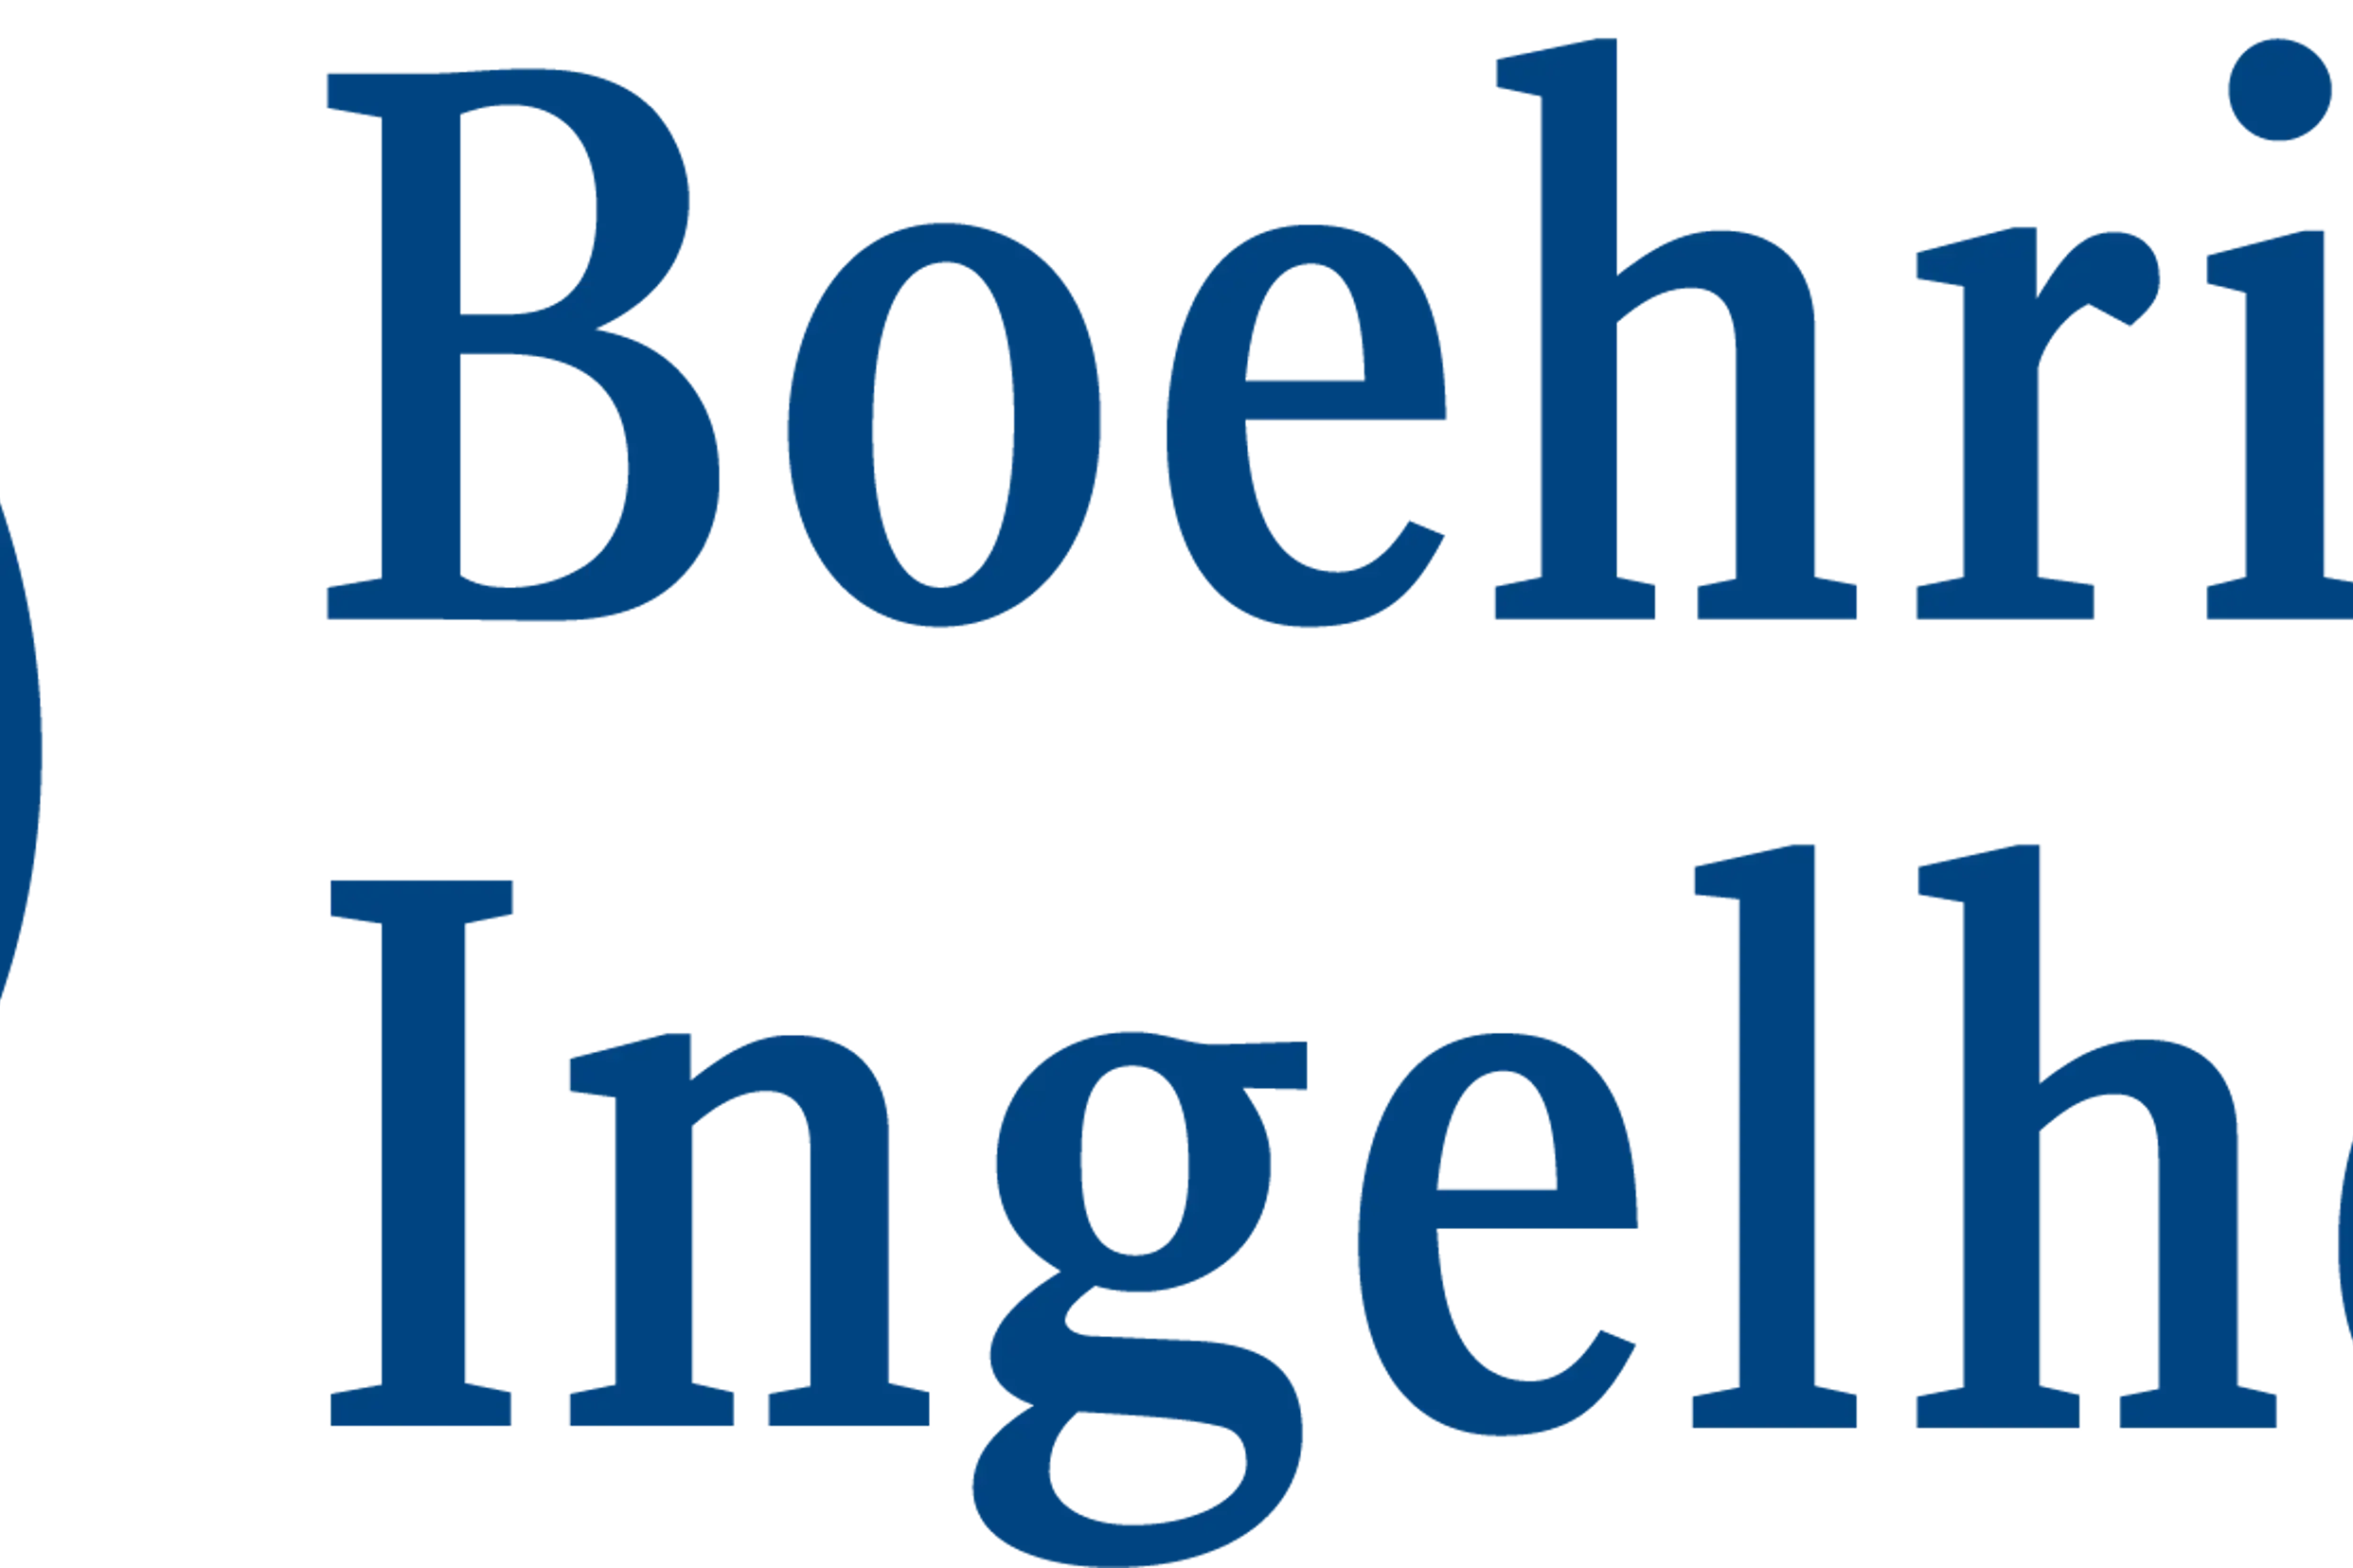 oehringer-ingelheim-international-gmbh-logo-eli-l-5b74c734ec3387.5794910115343798289675.png